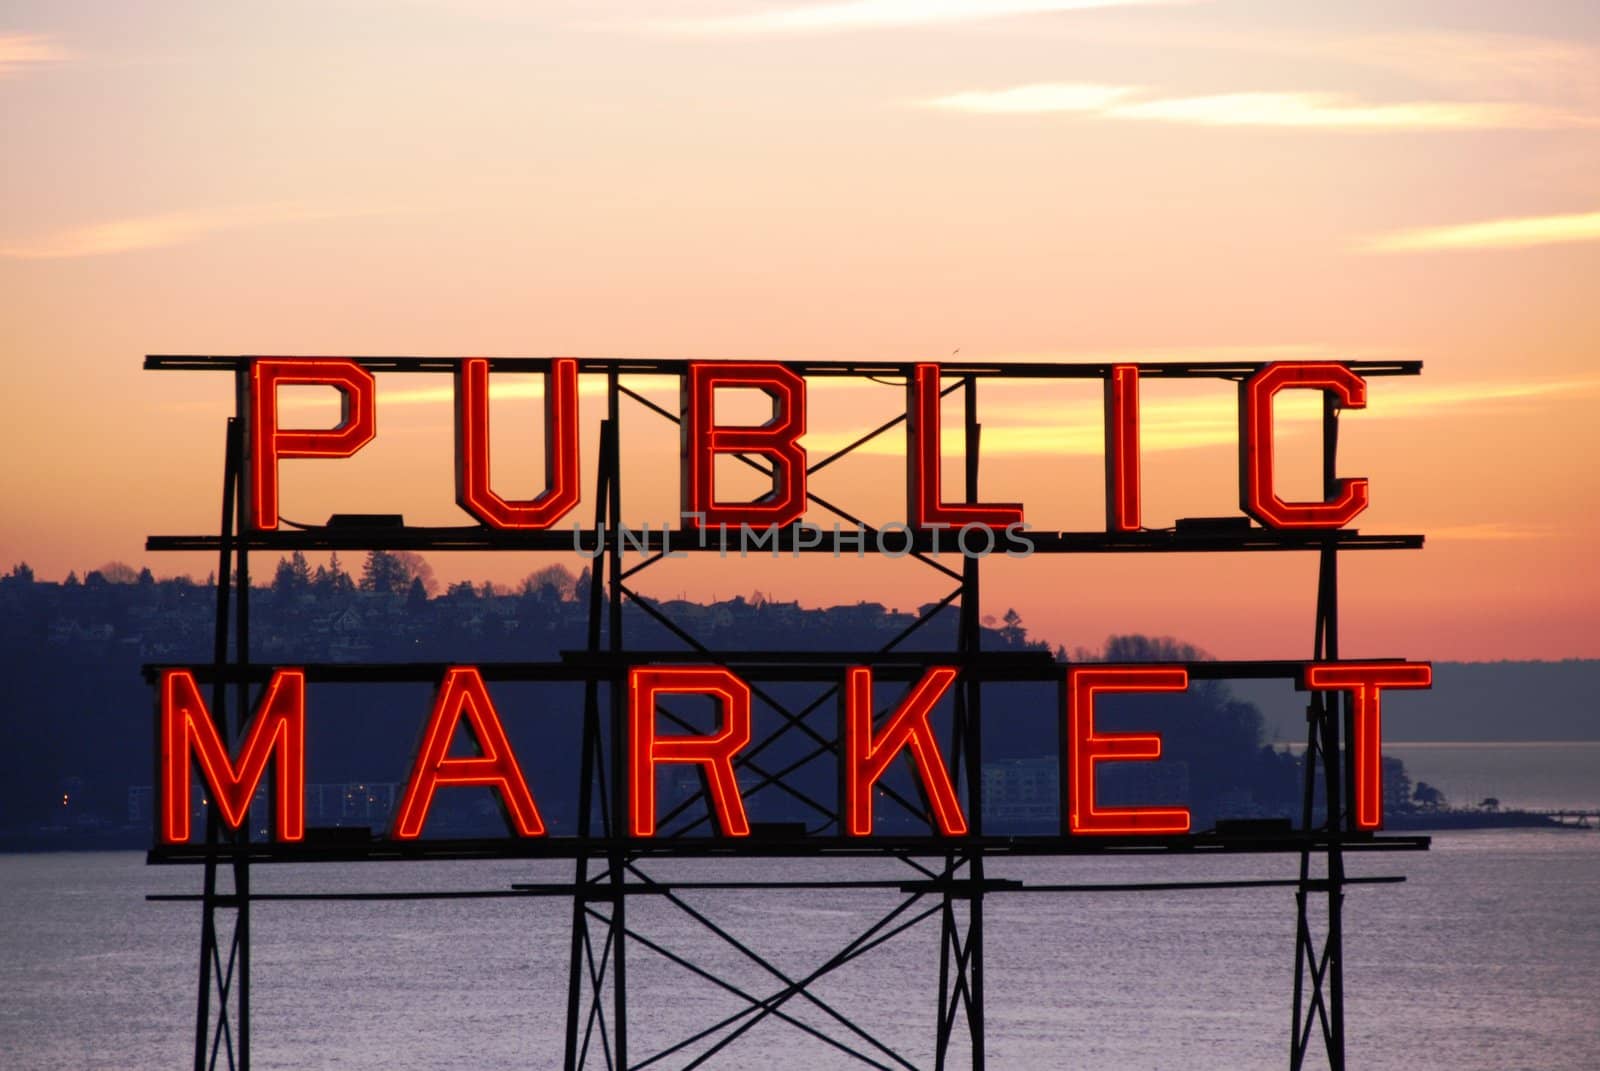 Pike place market by seattlephoto